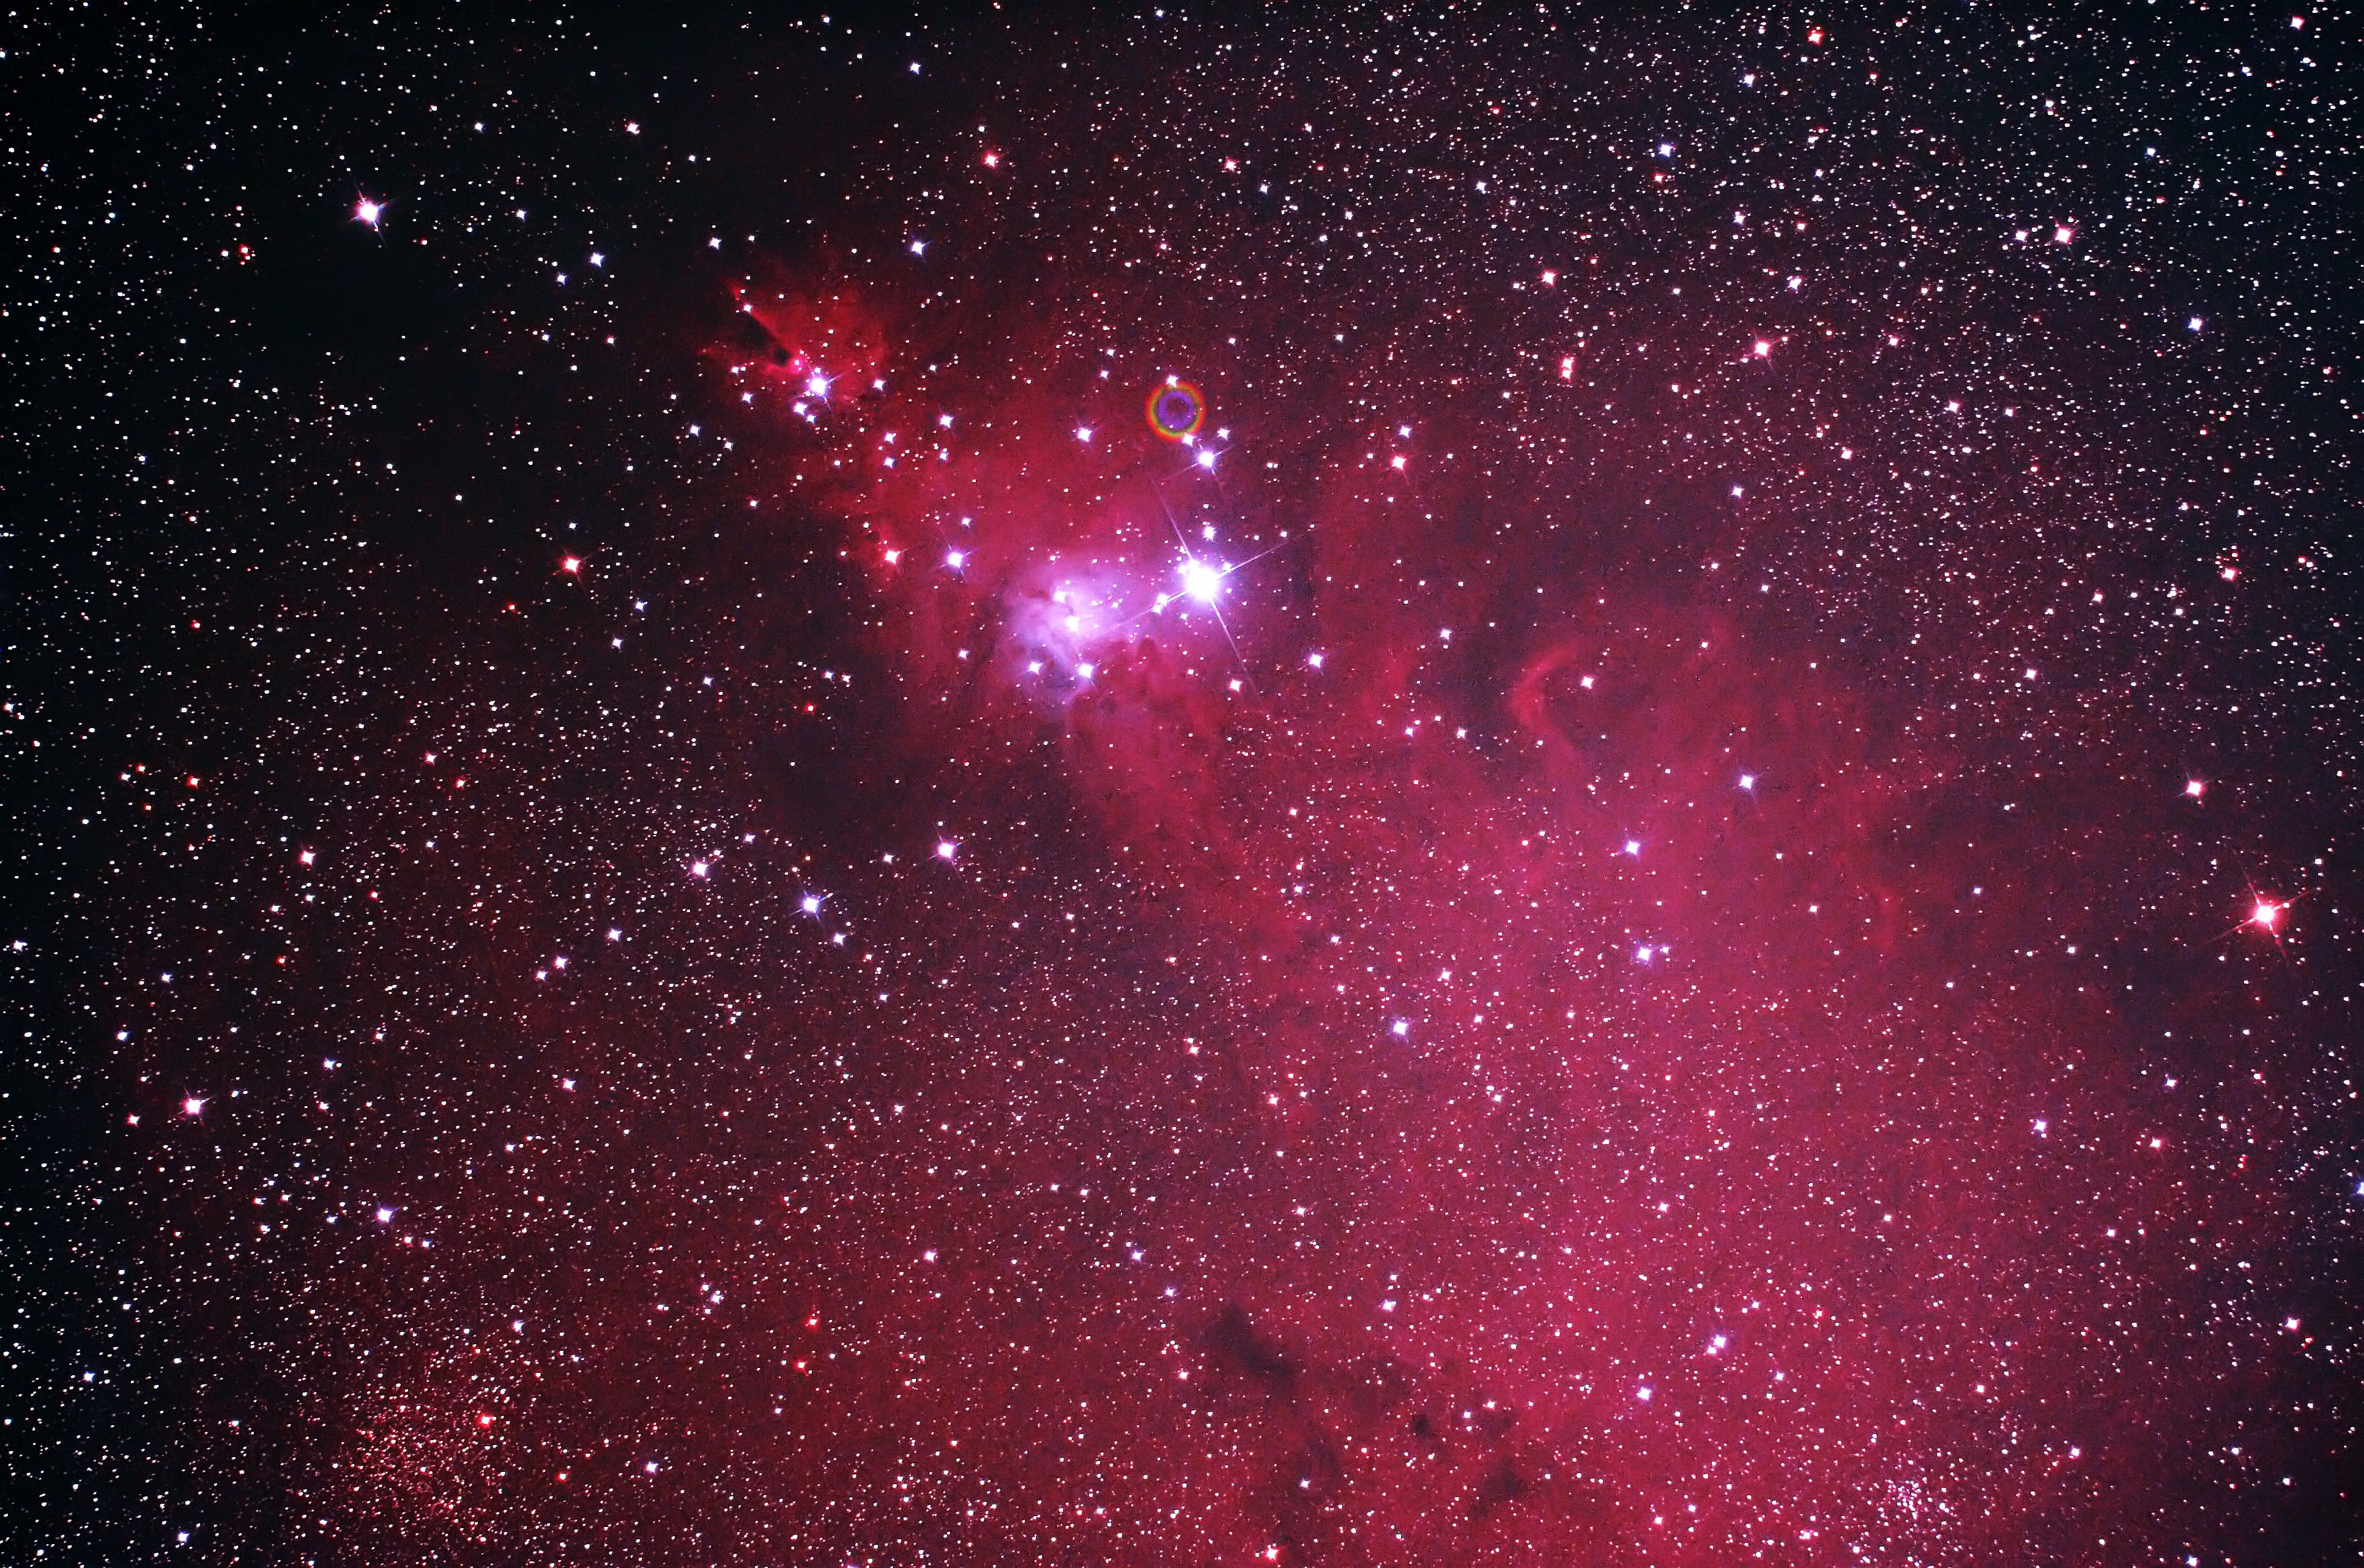 NGC2264_120124_E160_8-600s_ps5_002c_filtered2.jpg